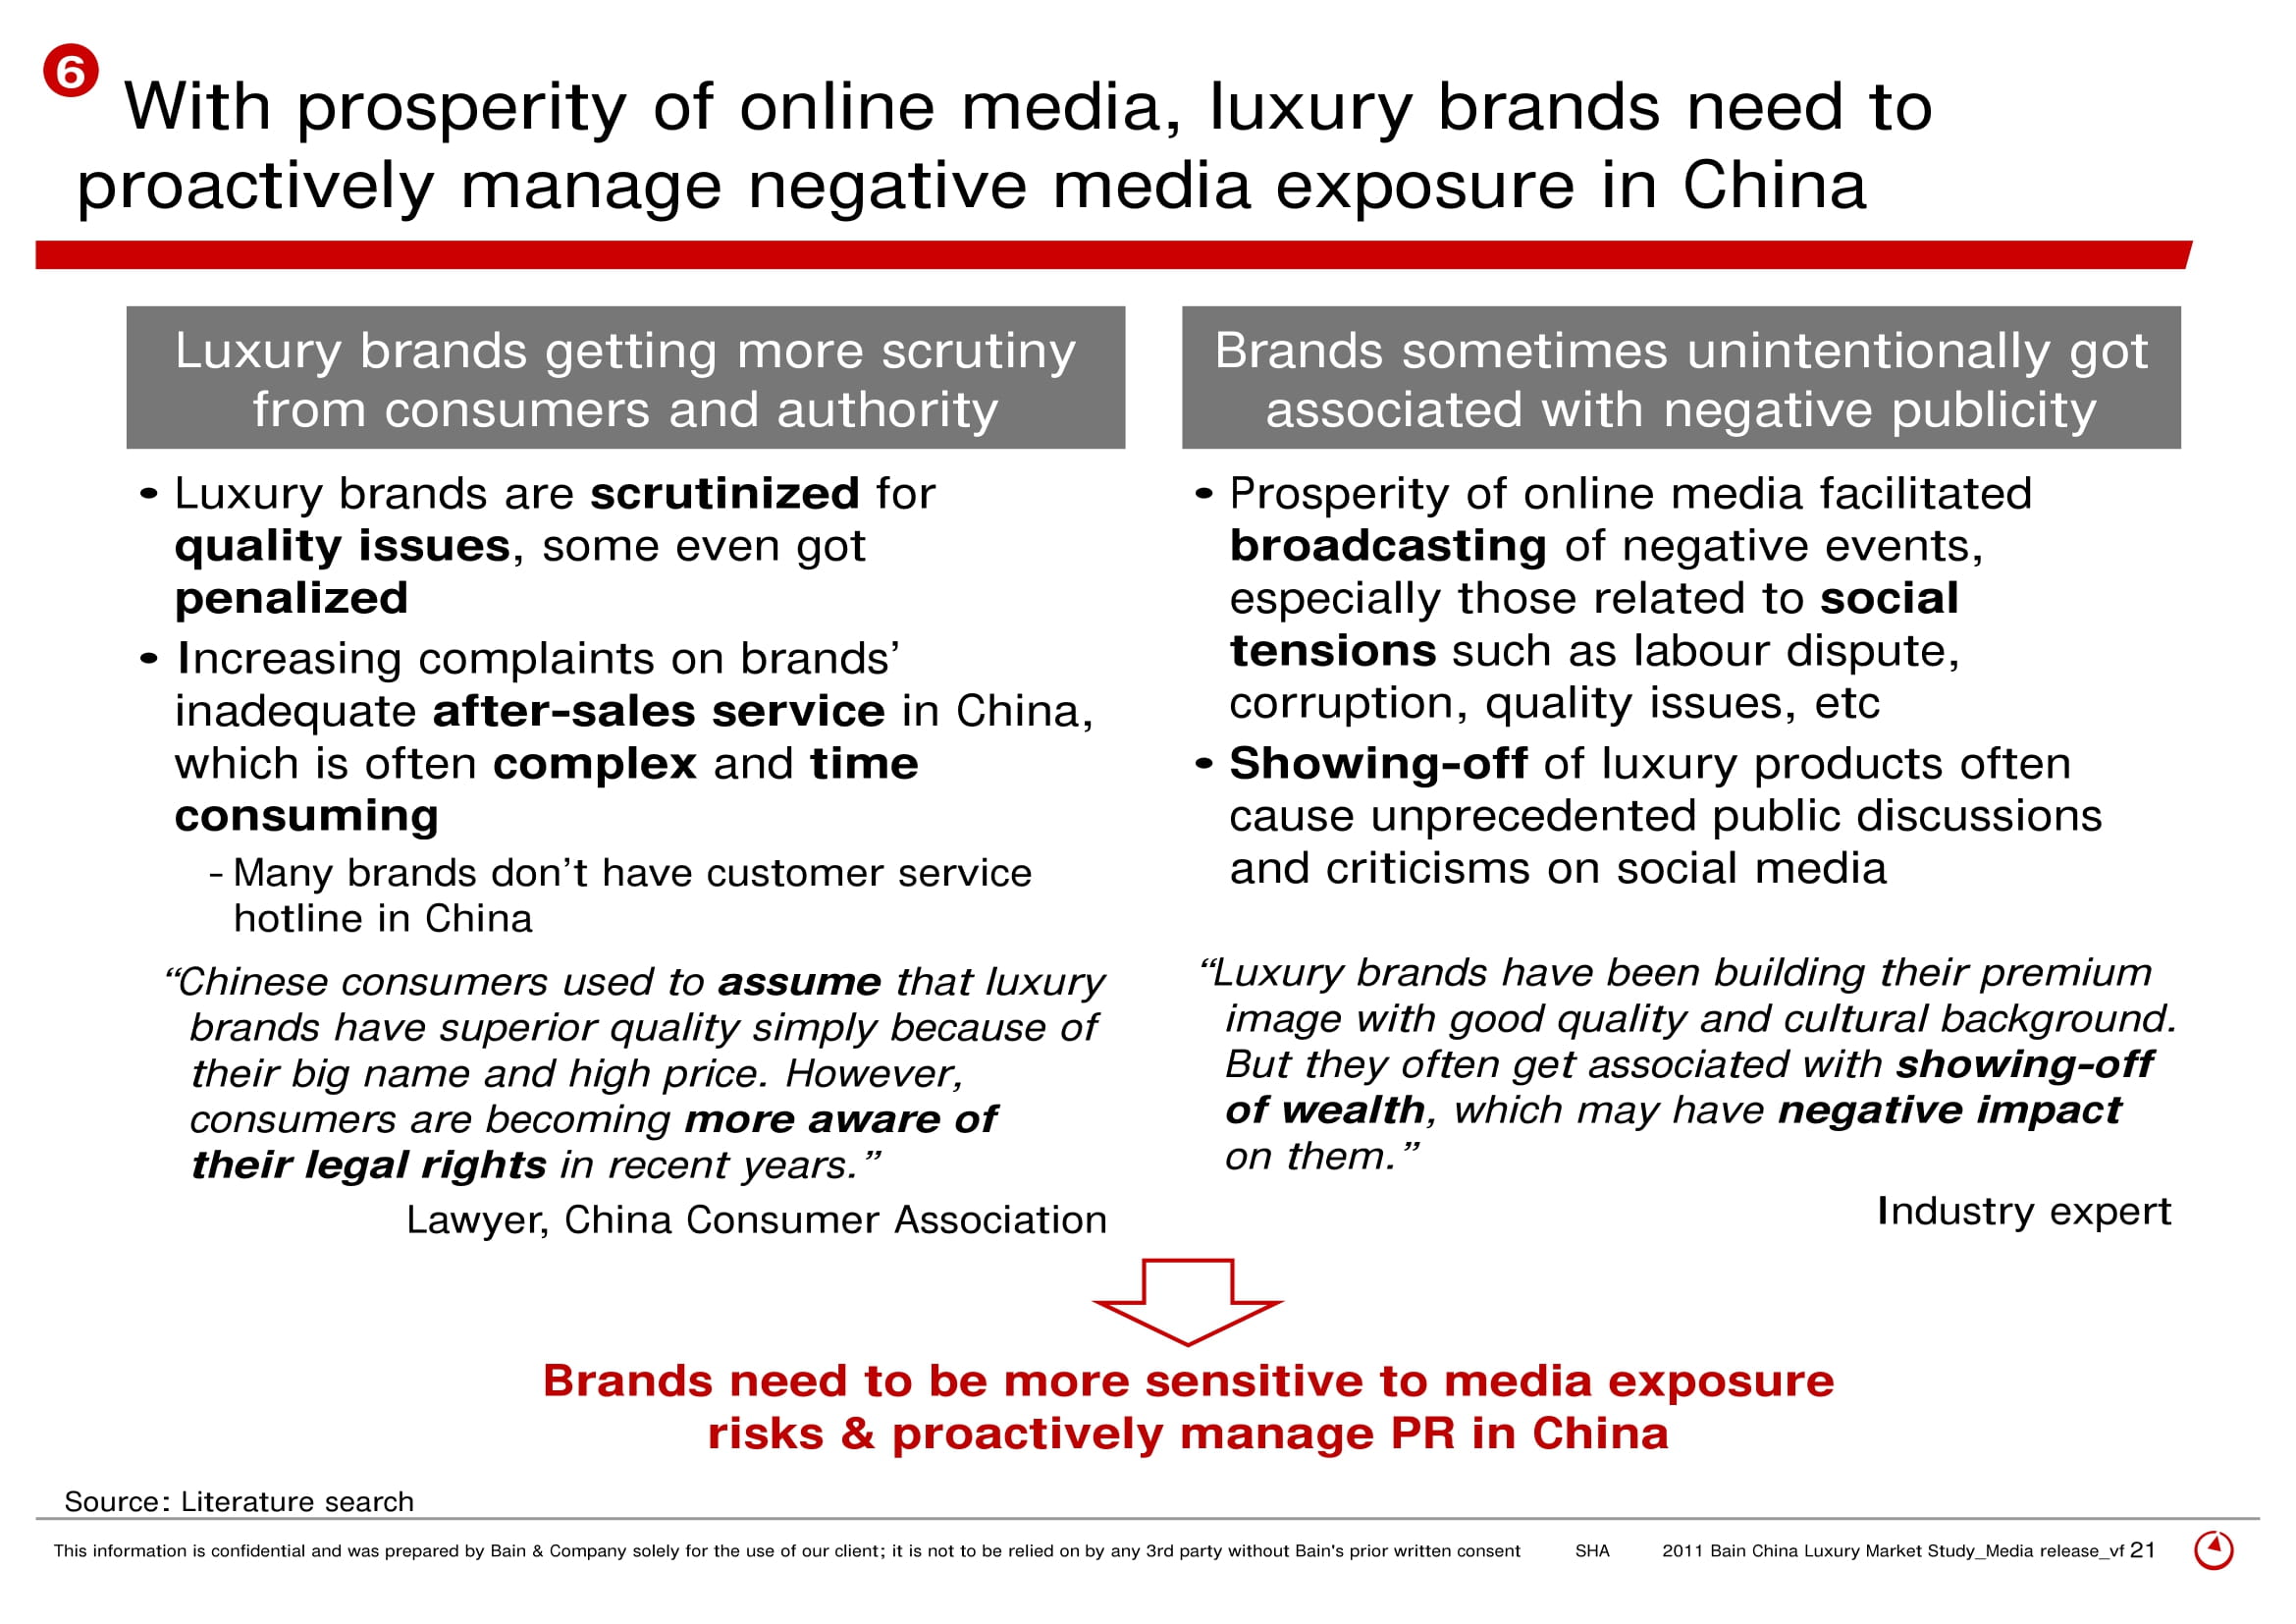 Bain China Luxury Market Study Slide 21